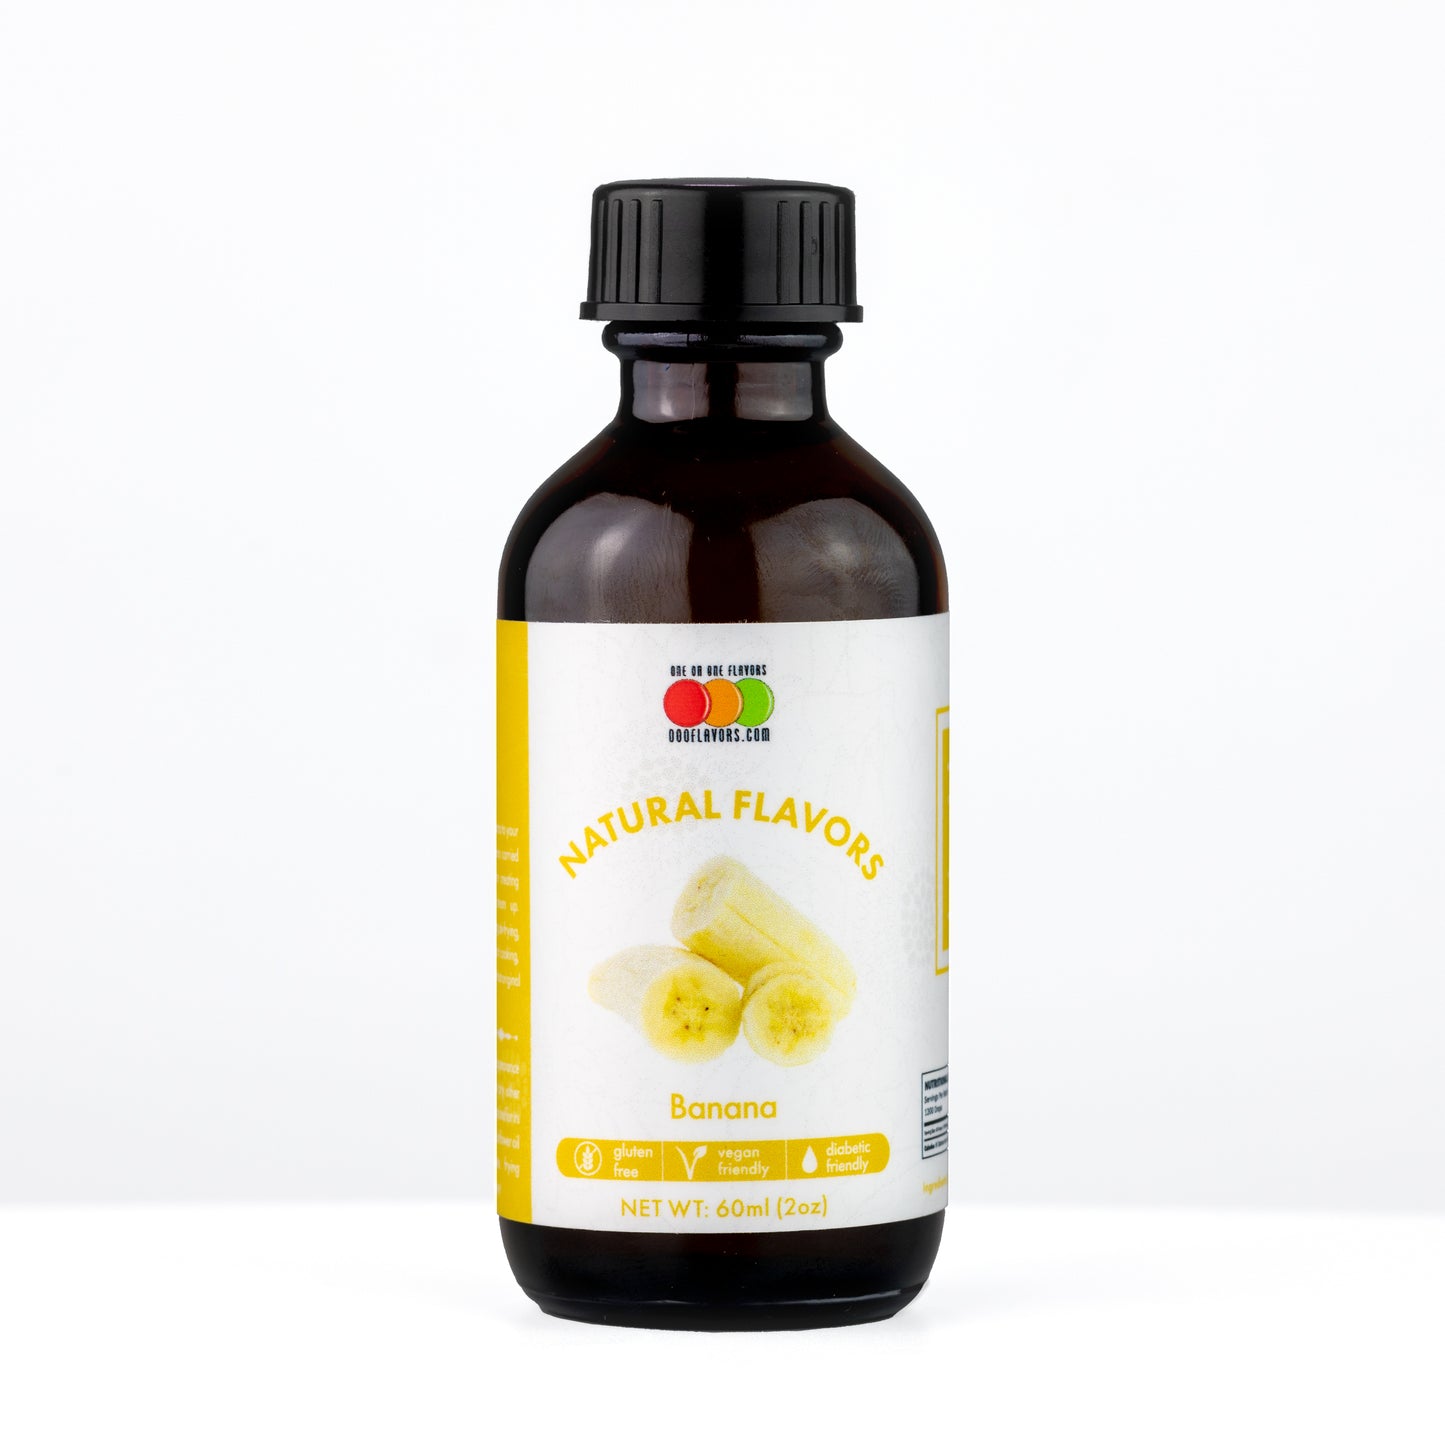 Banana Flavor - Natural Based Oil